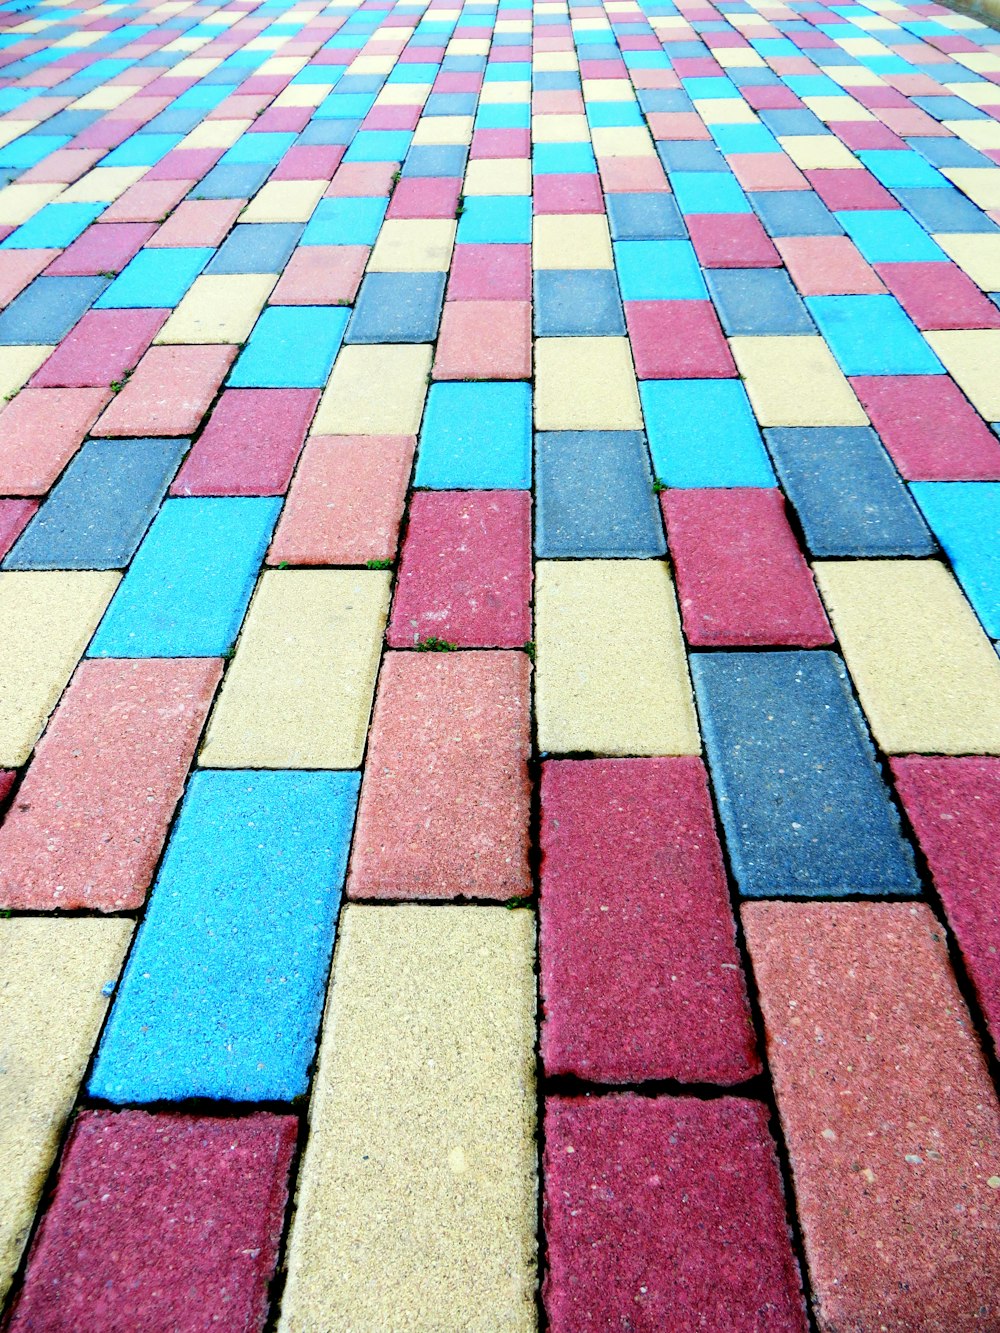 a close up of a colorful brick sidewalk